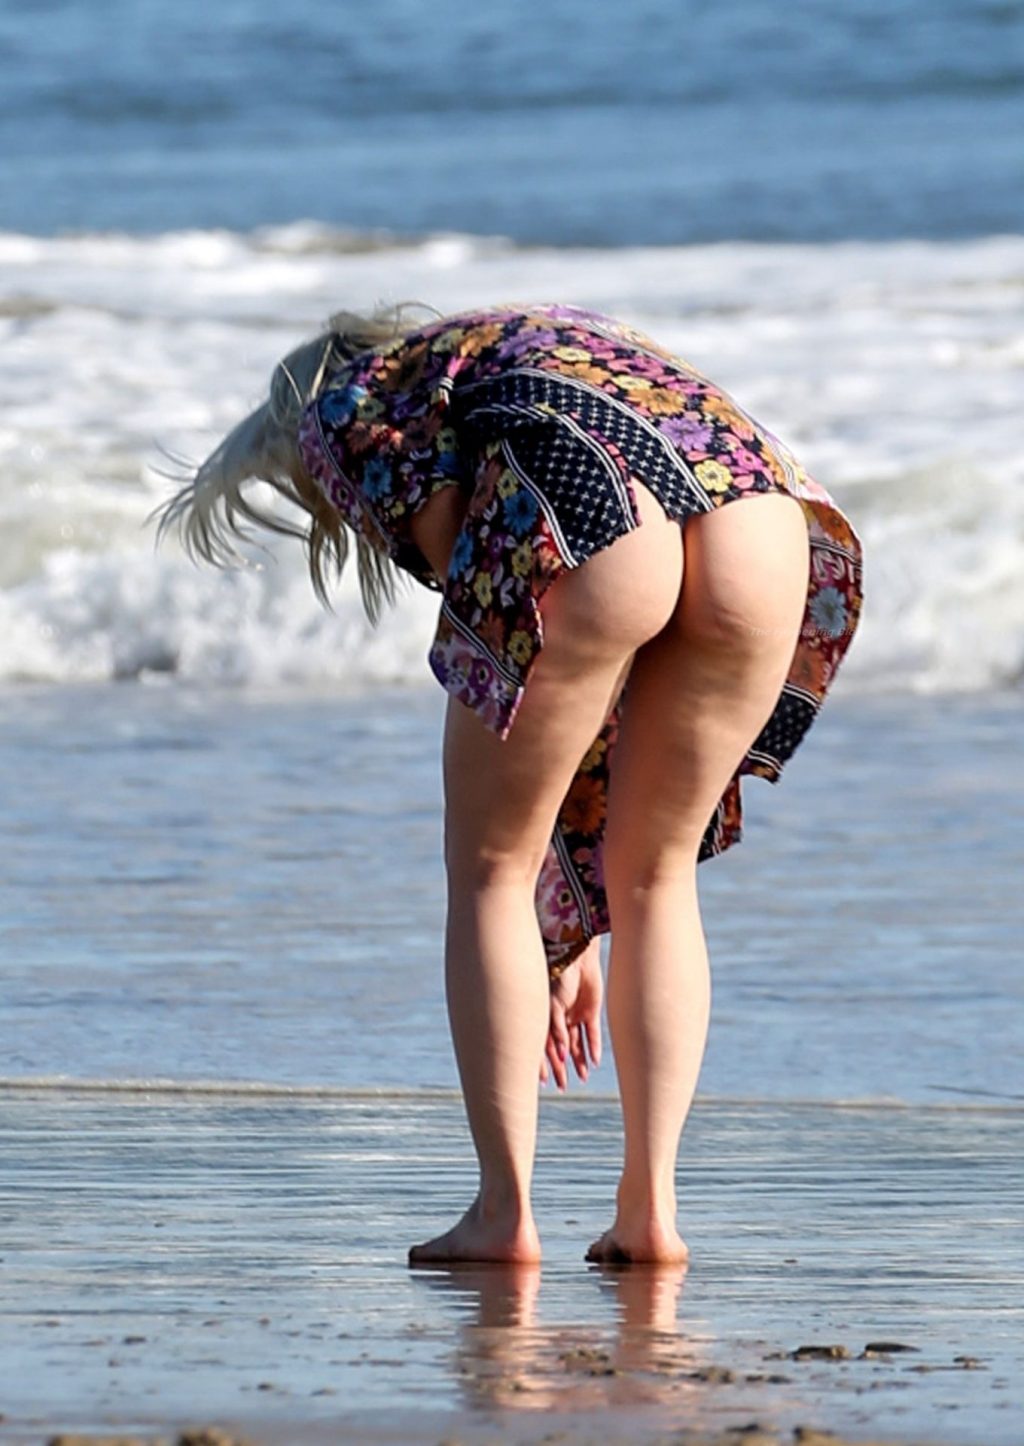 Ariel Winter Shows Off Her Butt on the Beach (99 Photos)